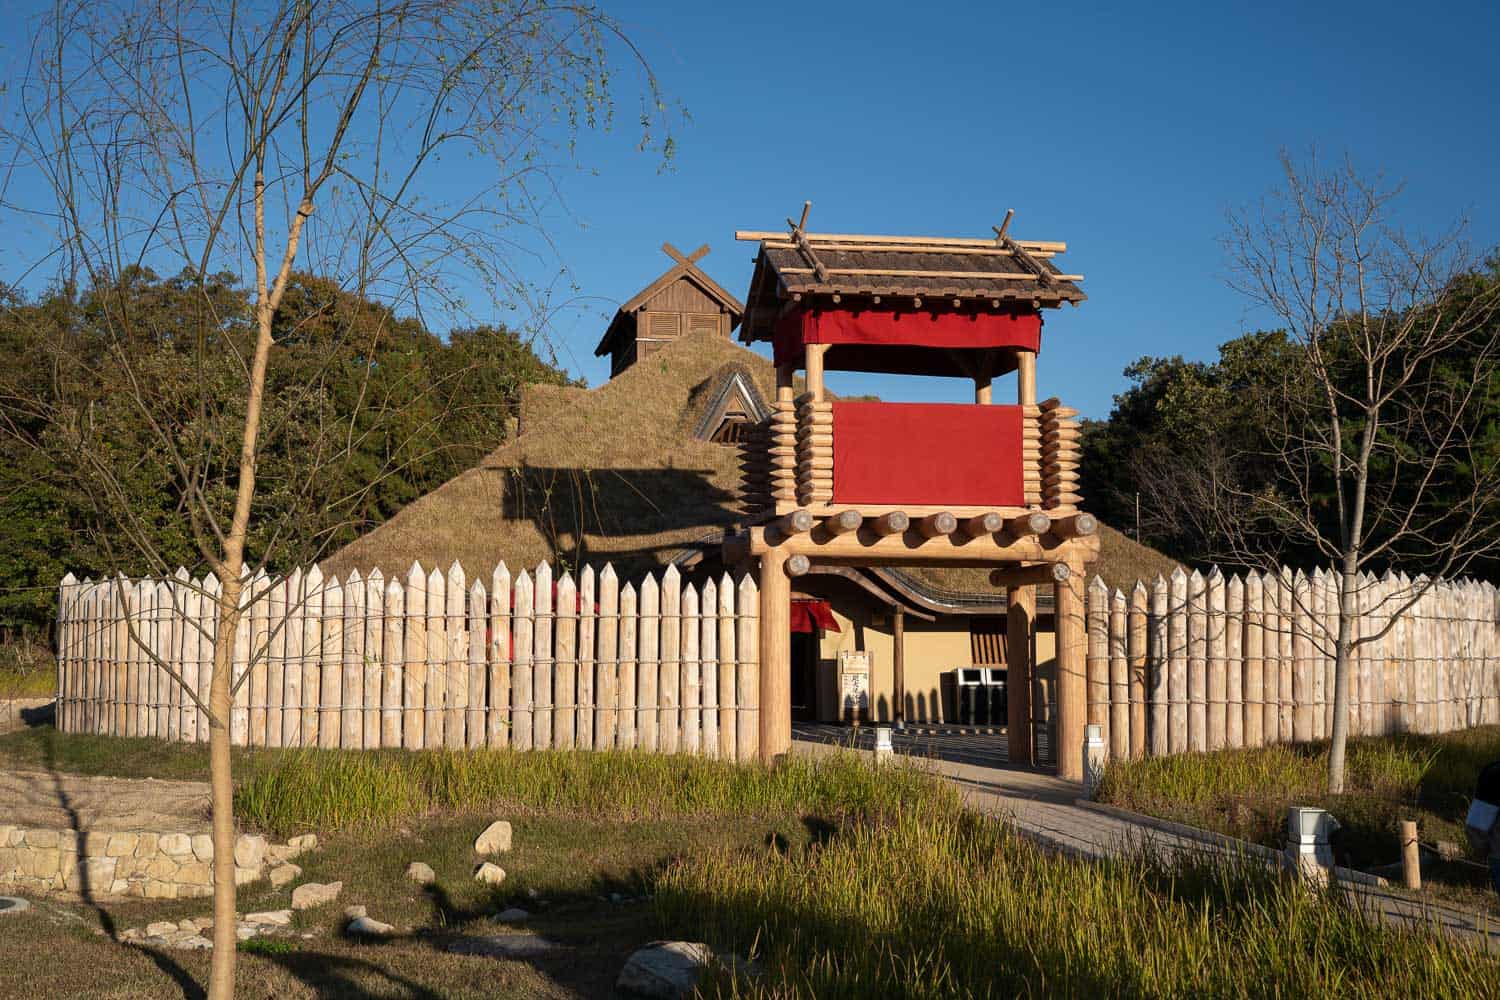 Recreation of Mononoke Village, Ghibli Park, Japan